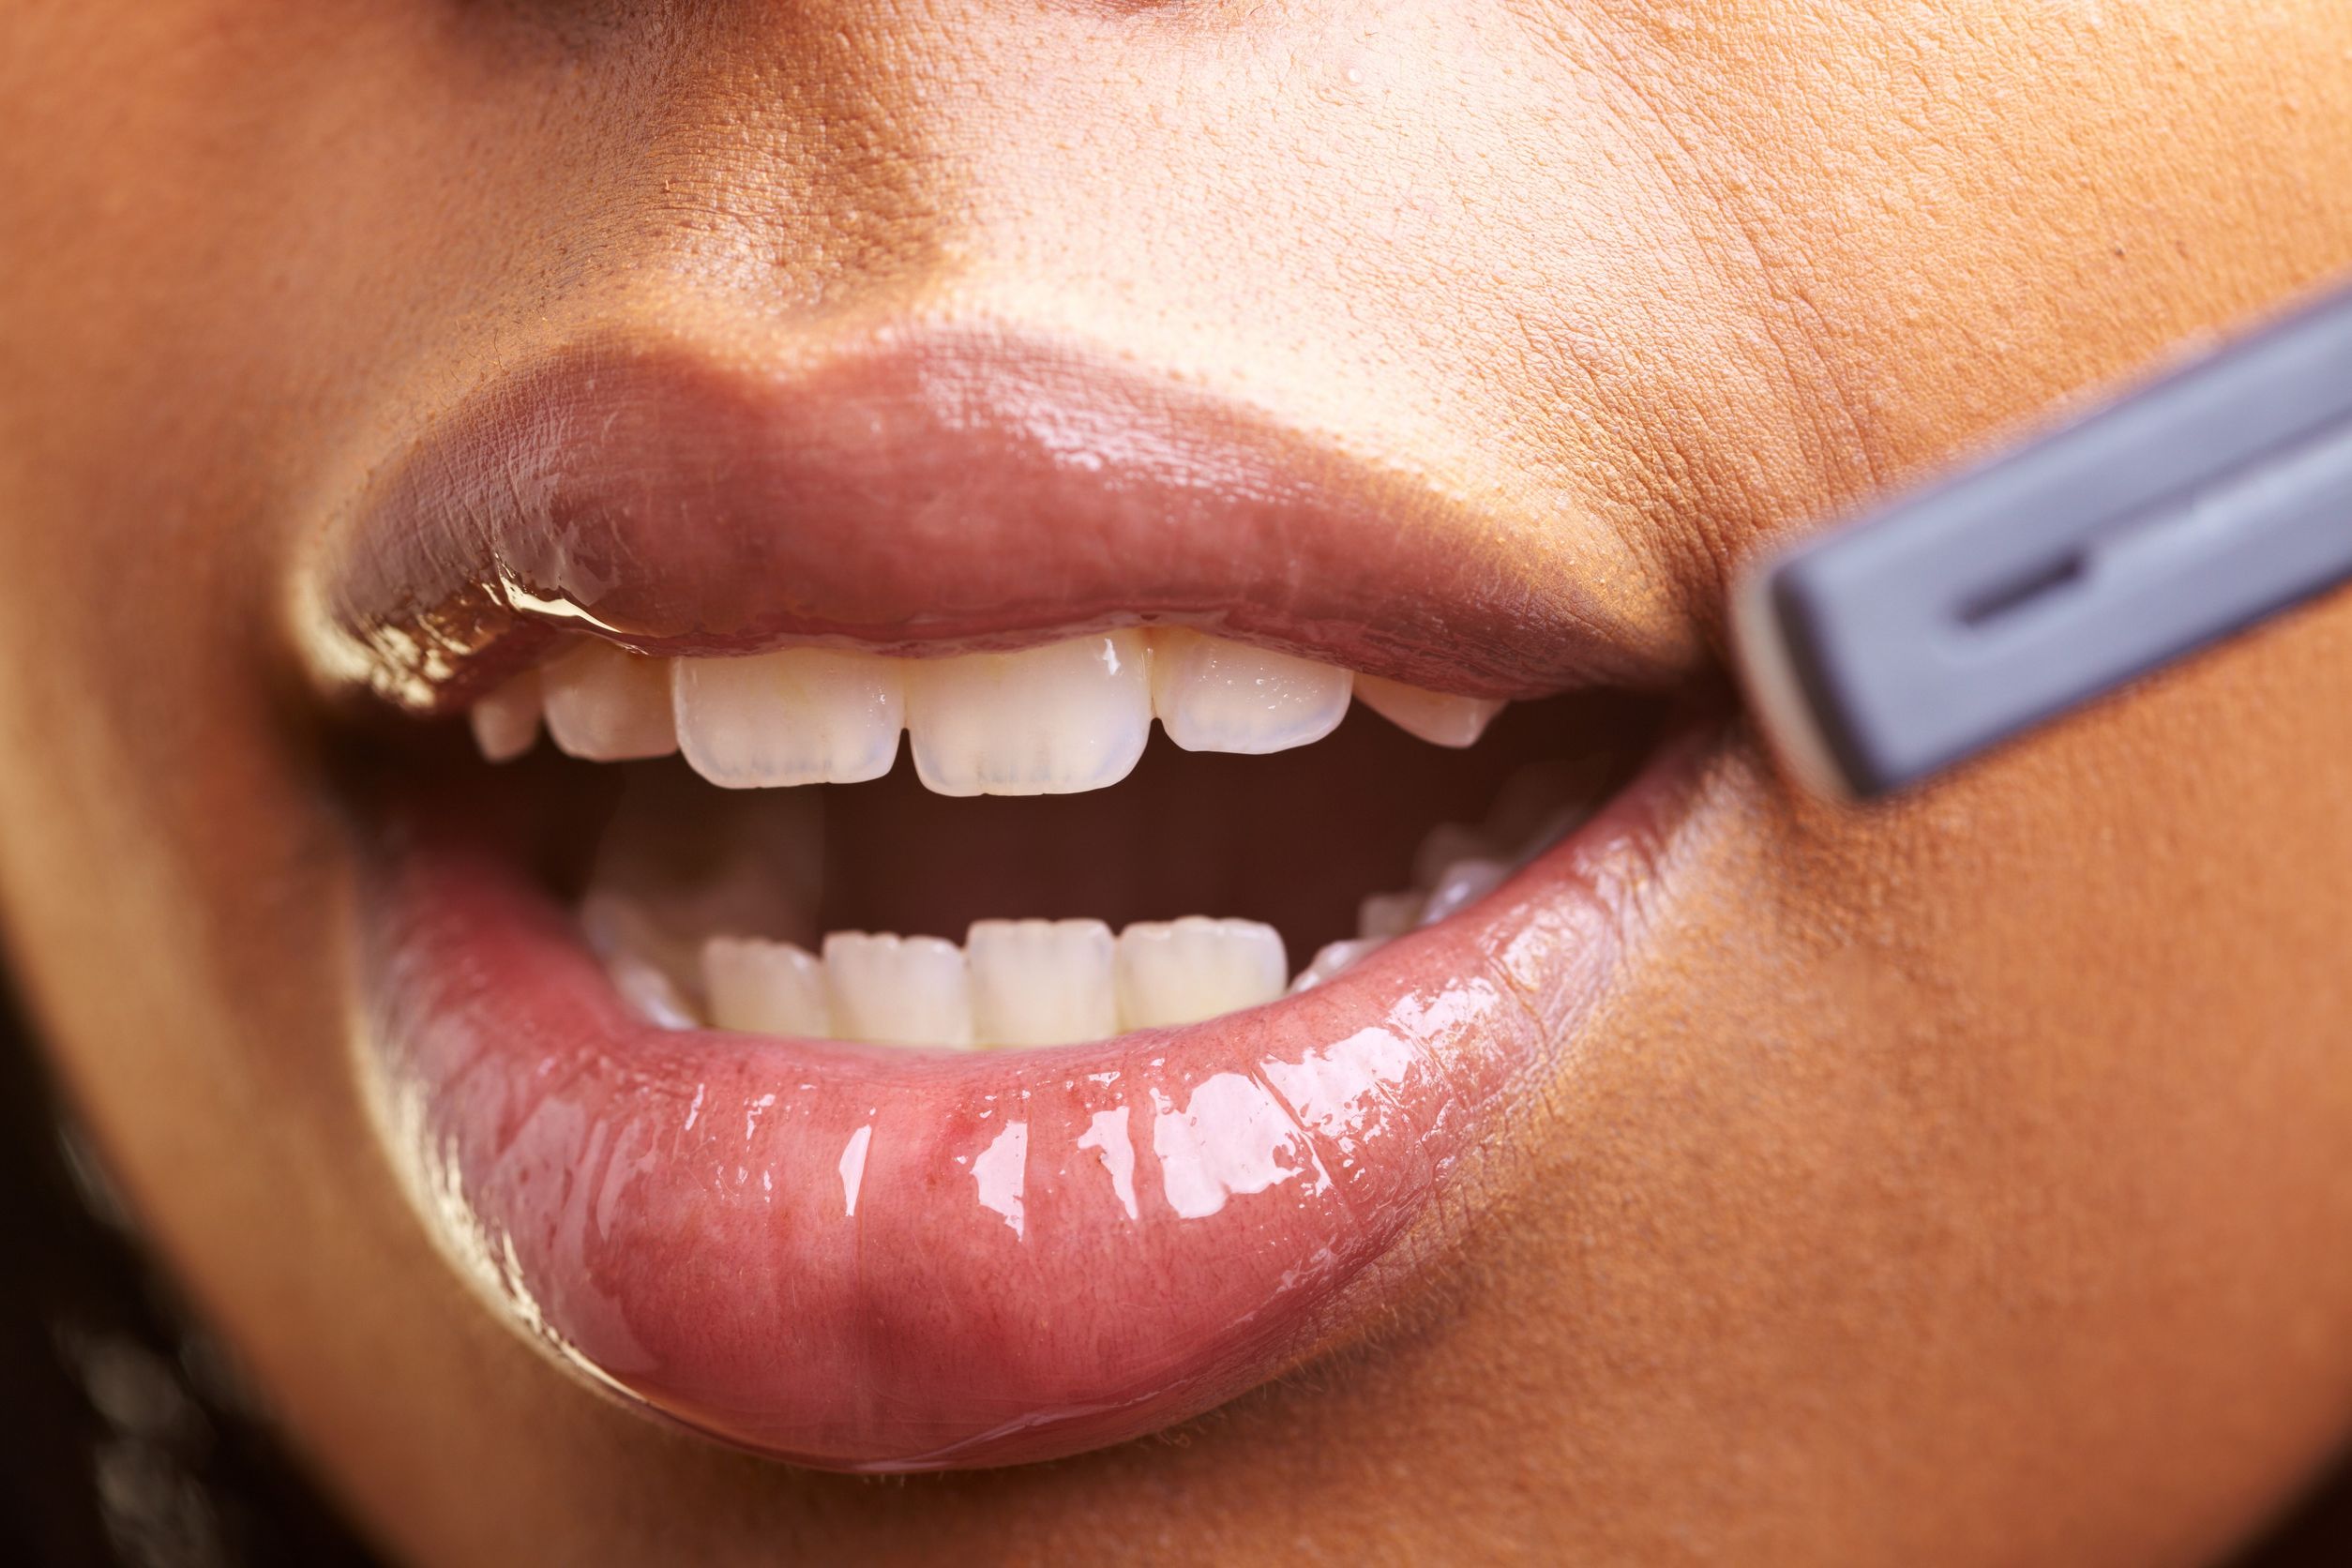 sonar phone voice biometrics mouth face